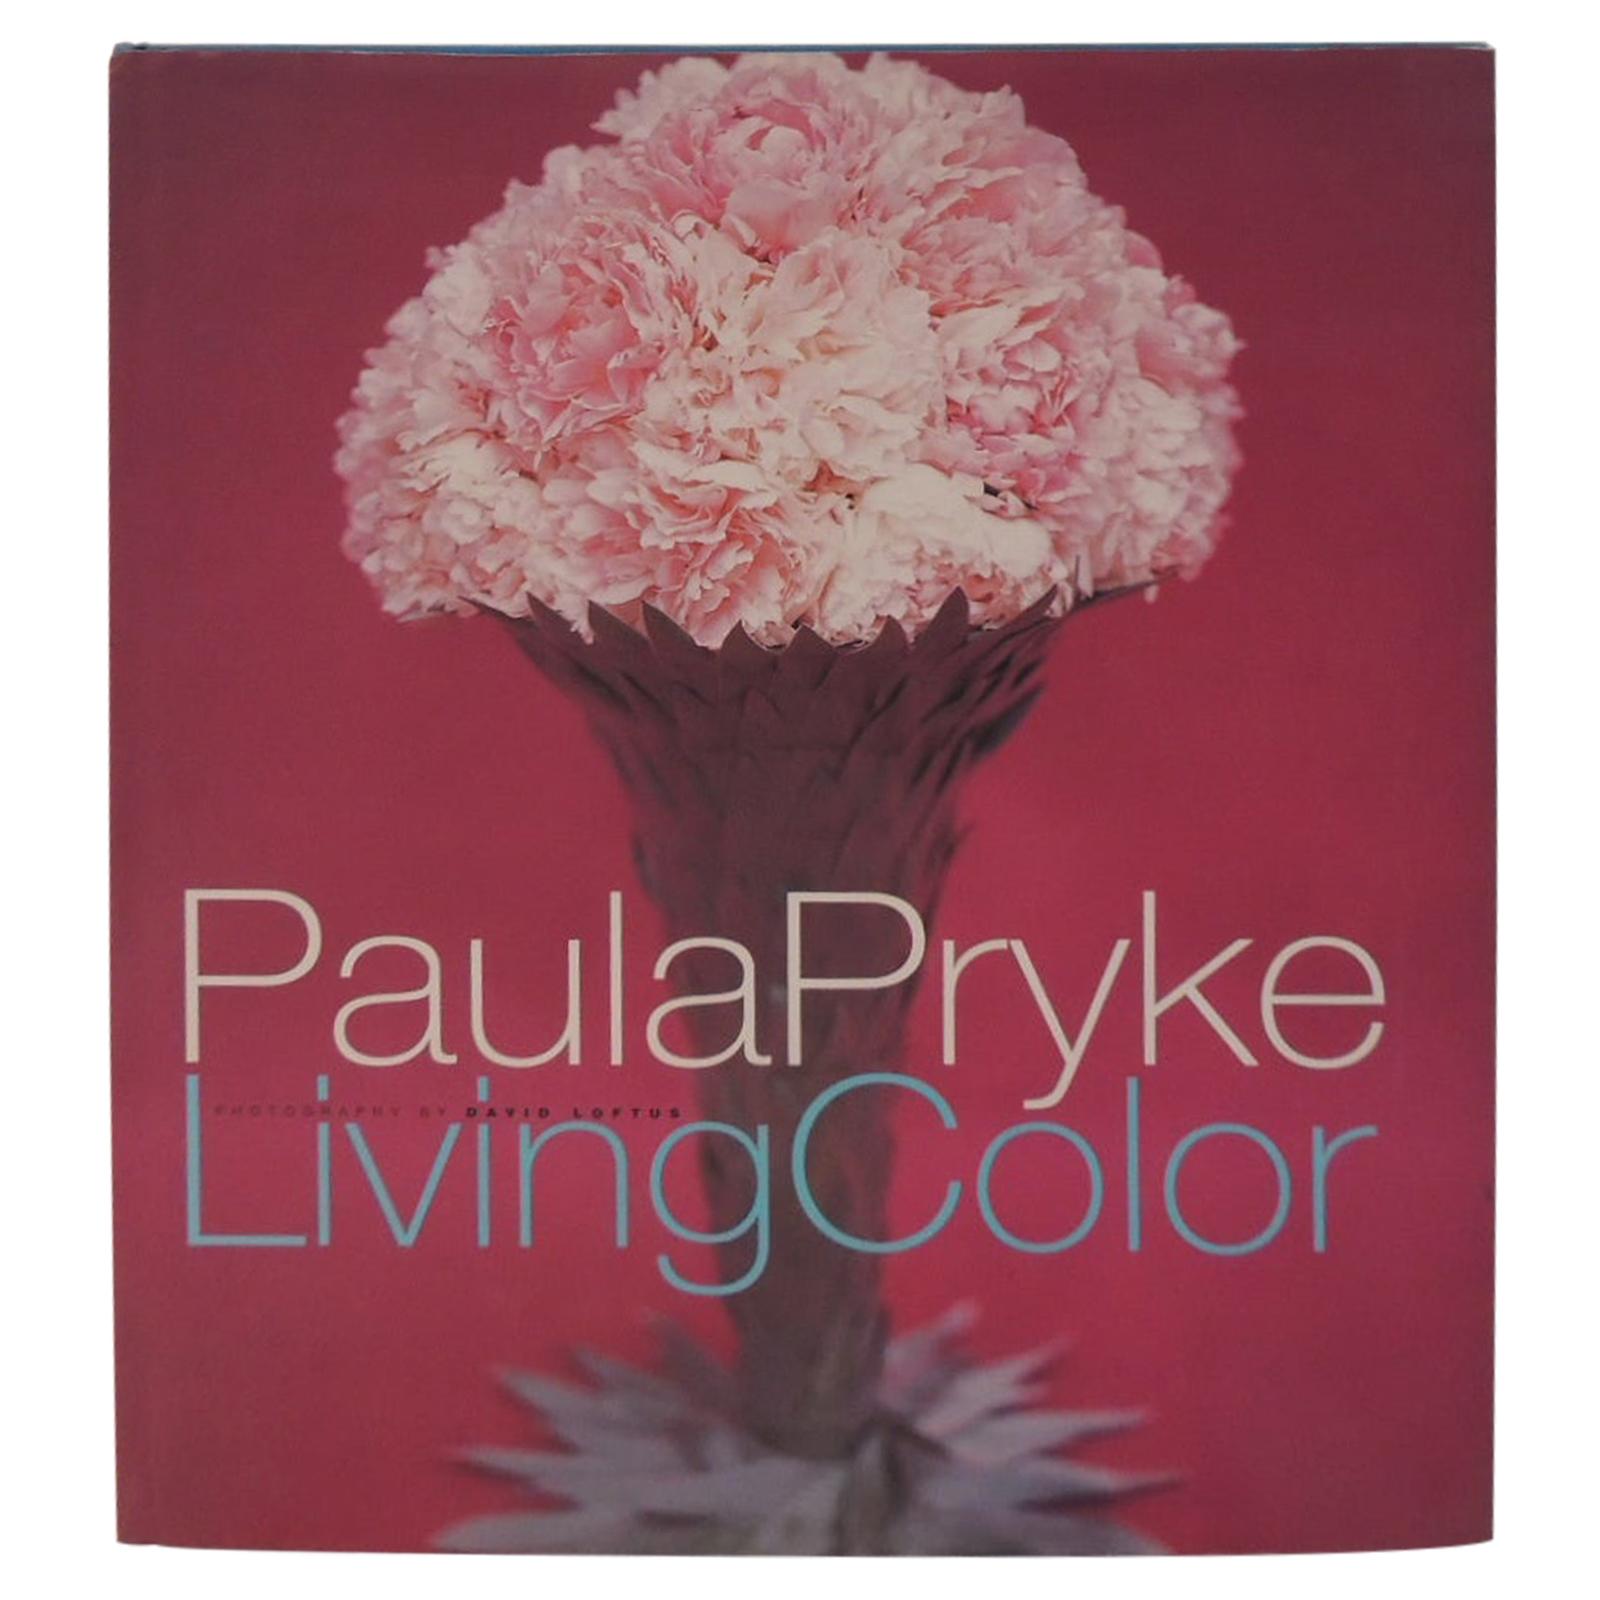 Paula Pryke Living Color Hardcover Book